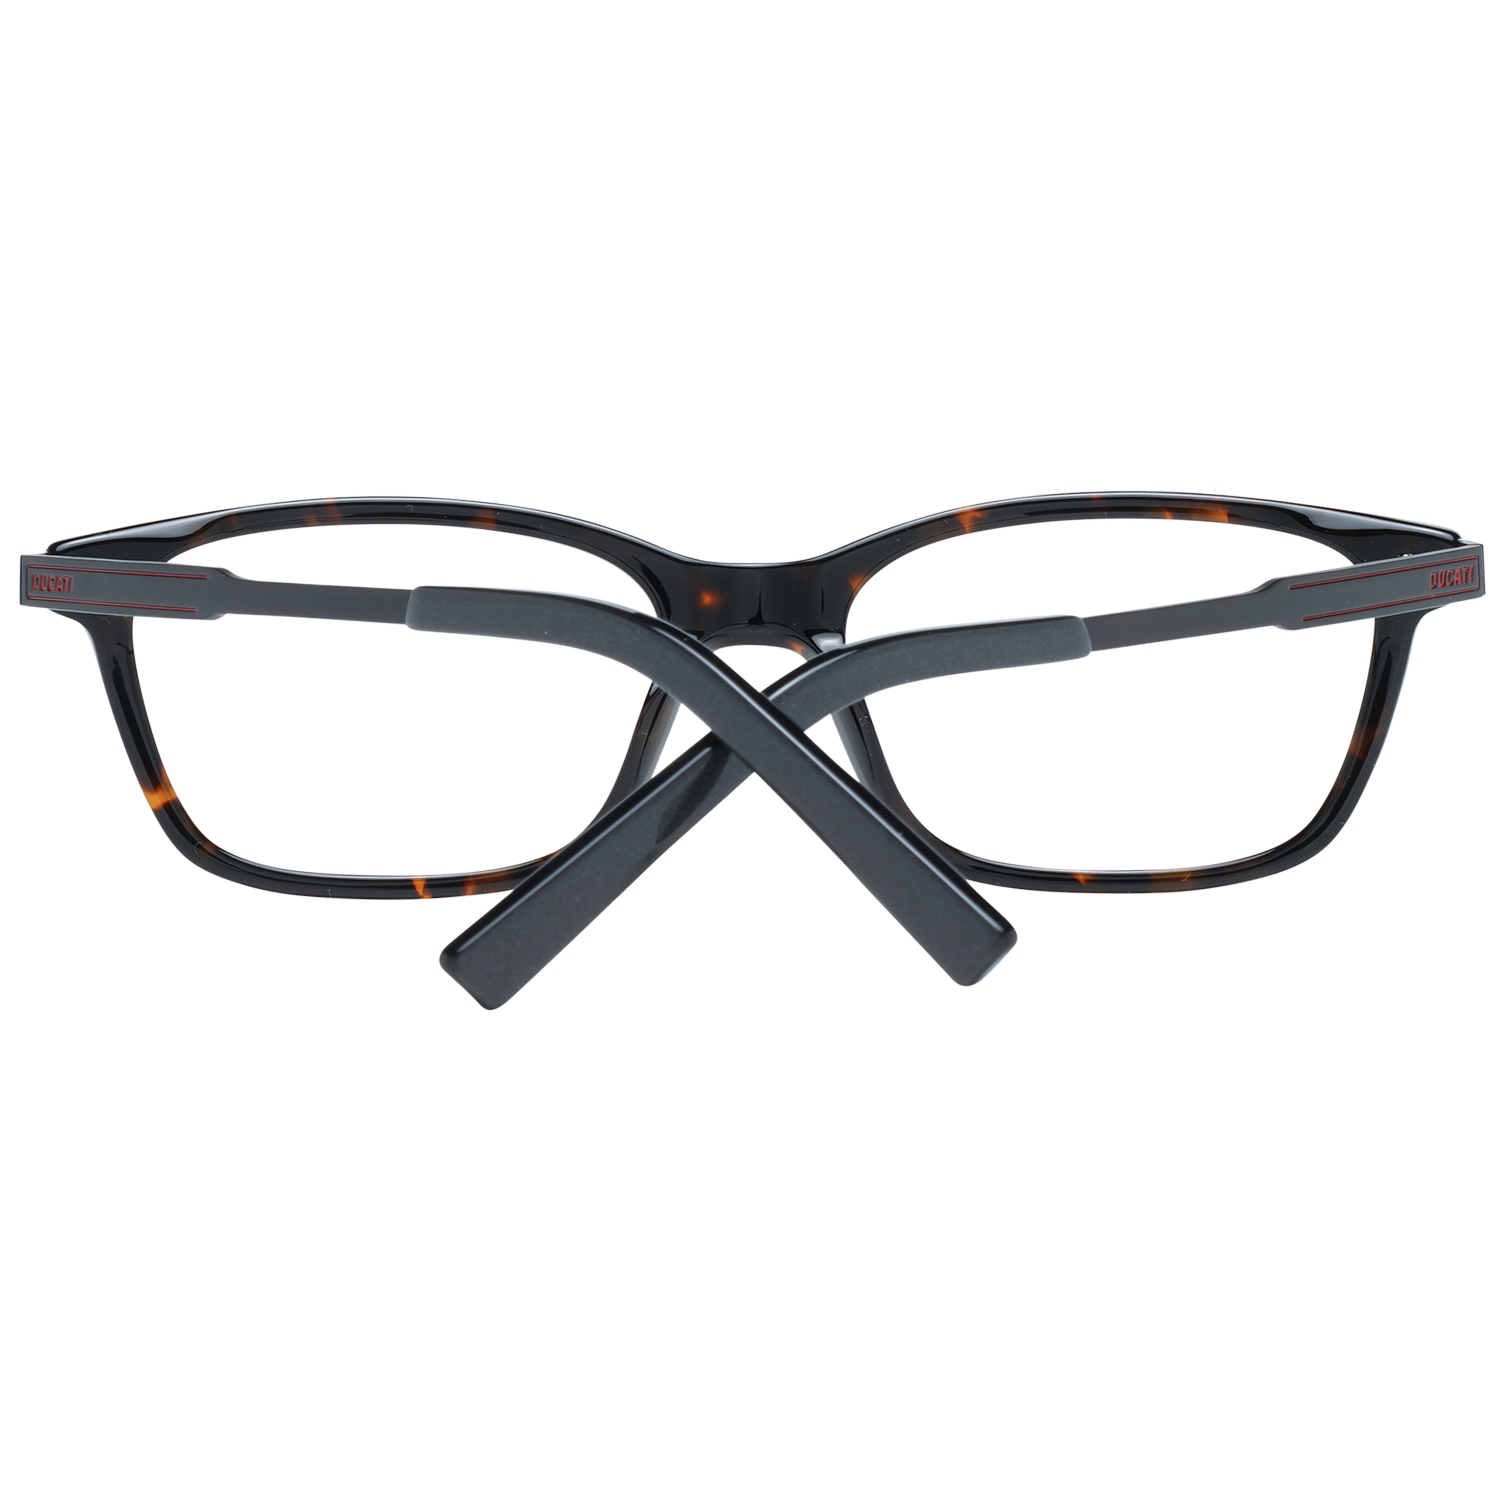 Ducati Frames Ducati Optical Frame DA1032 470 54 Eyeglasses Eyewear UK USA Australia 